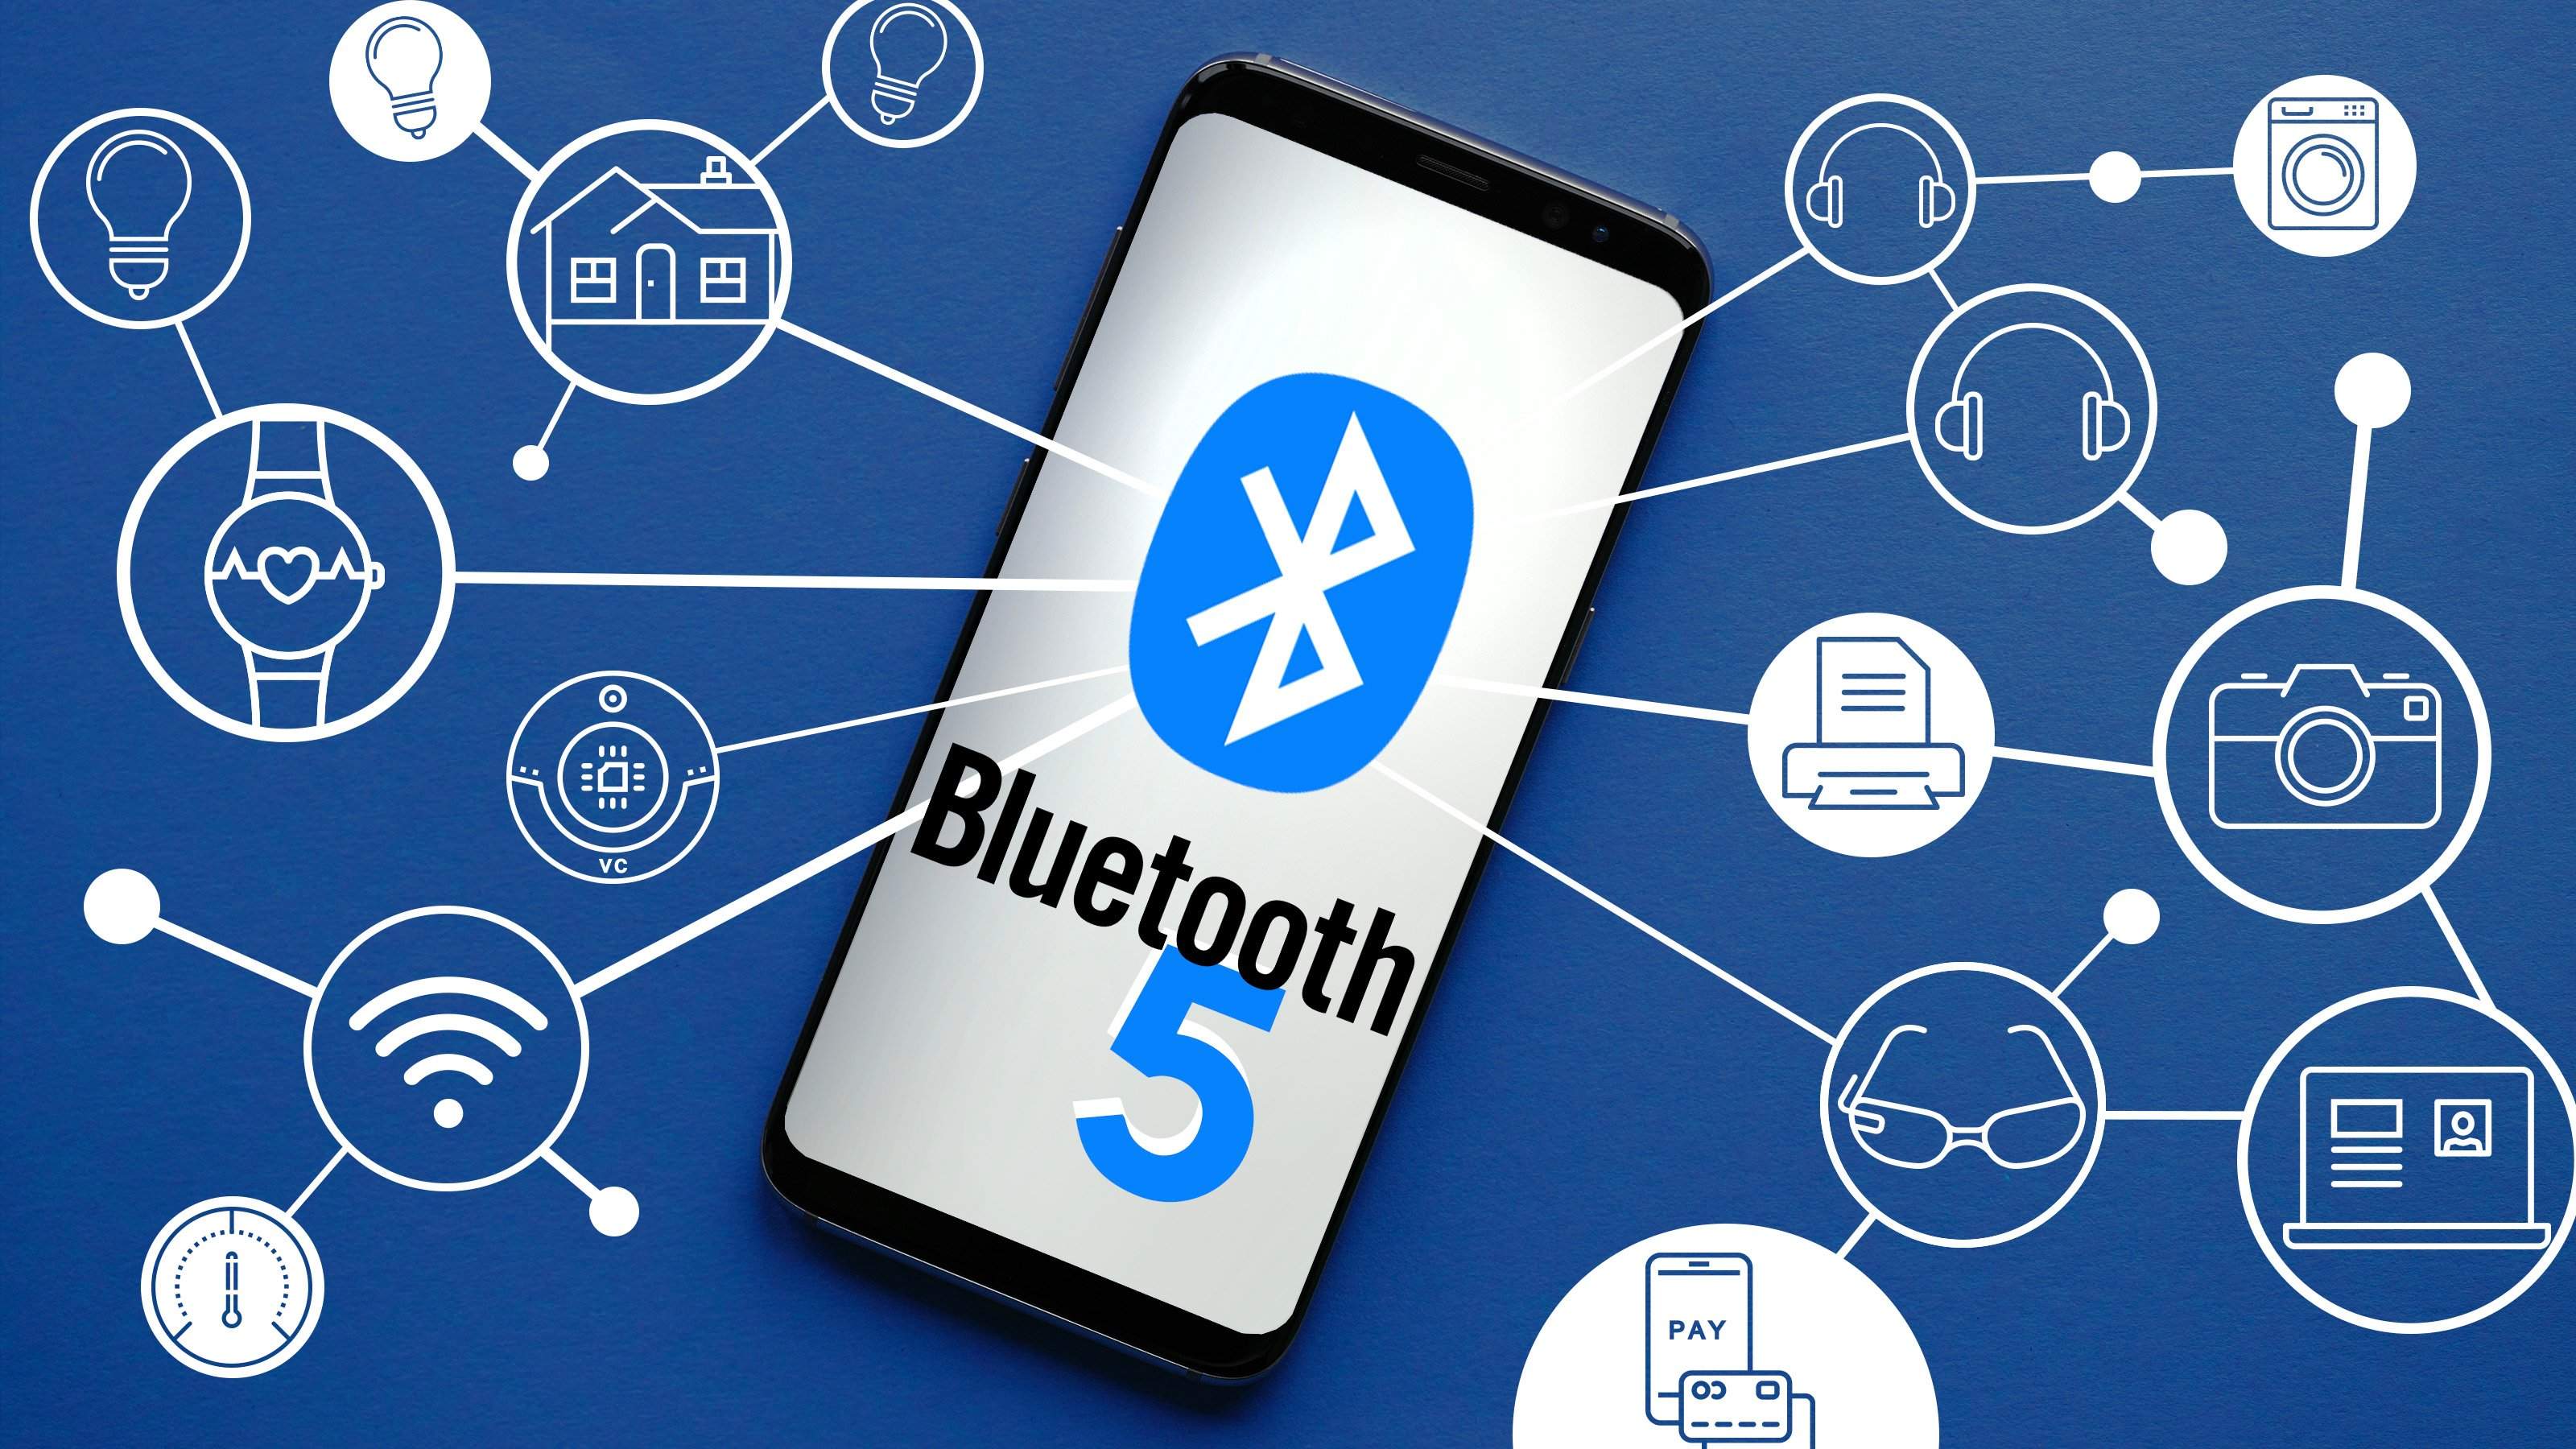 La tecnologia Bluetooth